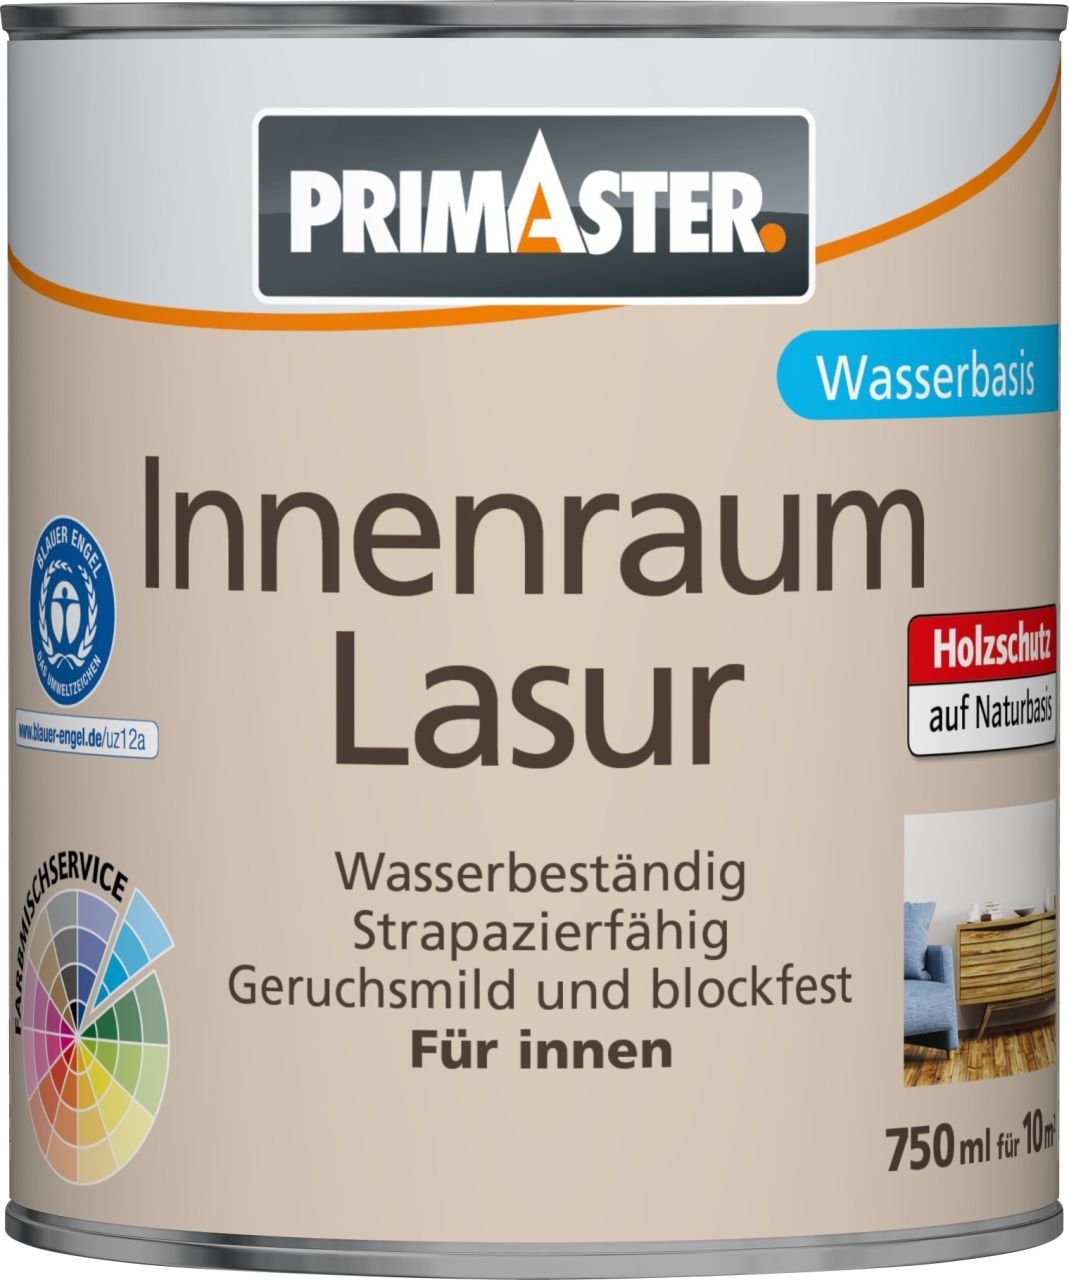 ml 750 Primaster Innenraumlasur Primaster farblos Lasur